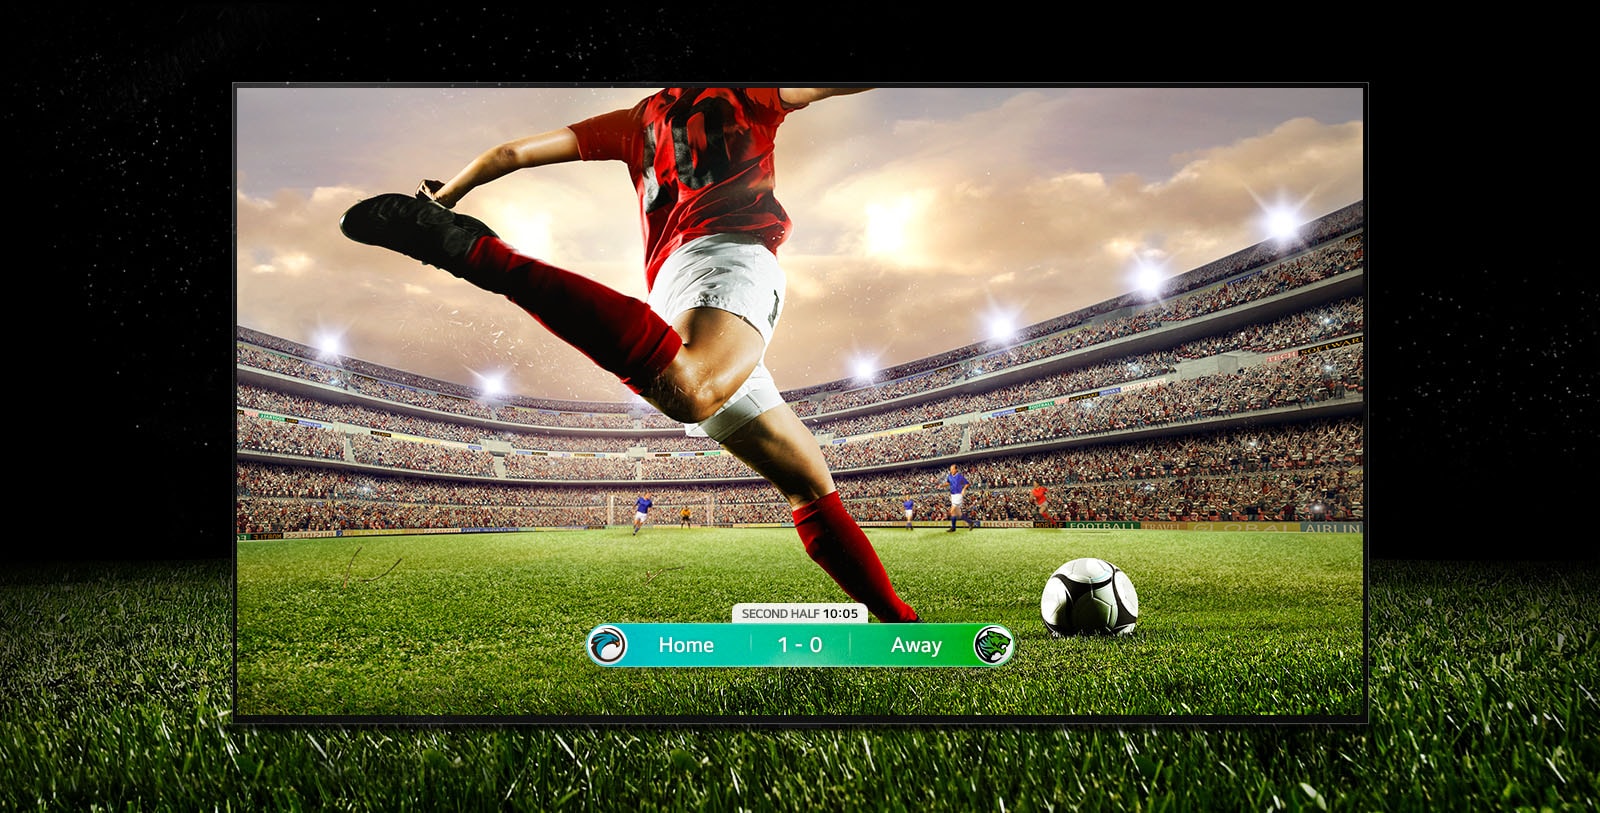 Slika zaslona s prikazom nogometne utakmice s igračem na crvene pruge koji se priprema udariti loptu preko stadiona. Rezultat utakmice vidi se na dnu zaslona. Zelena trava s igrališta širi se izvan zaslona na crnu pozadinu.